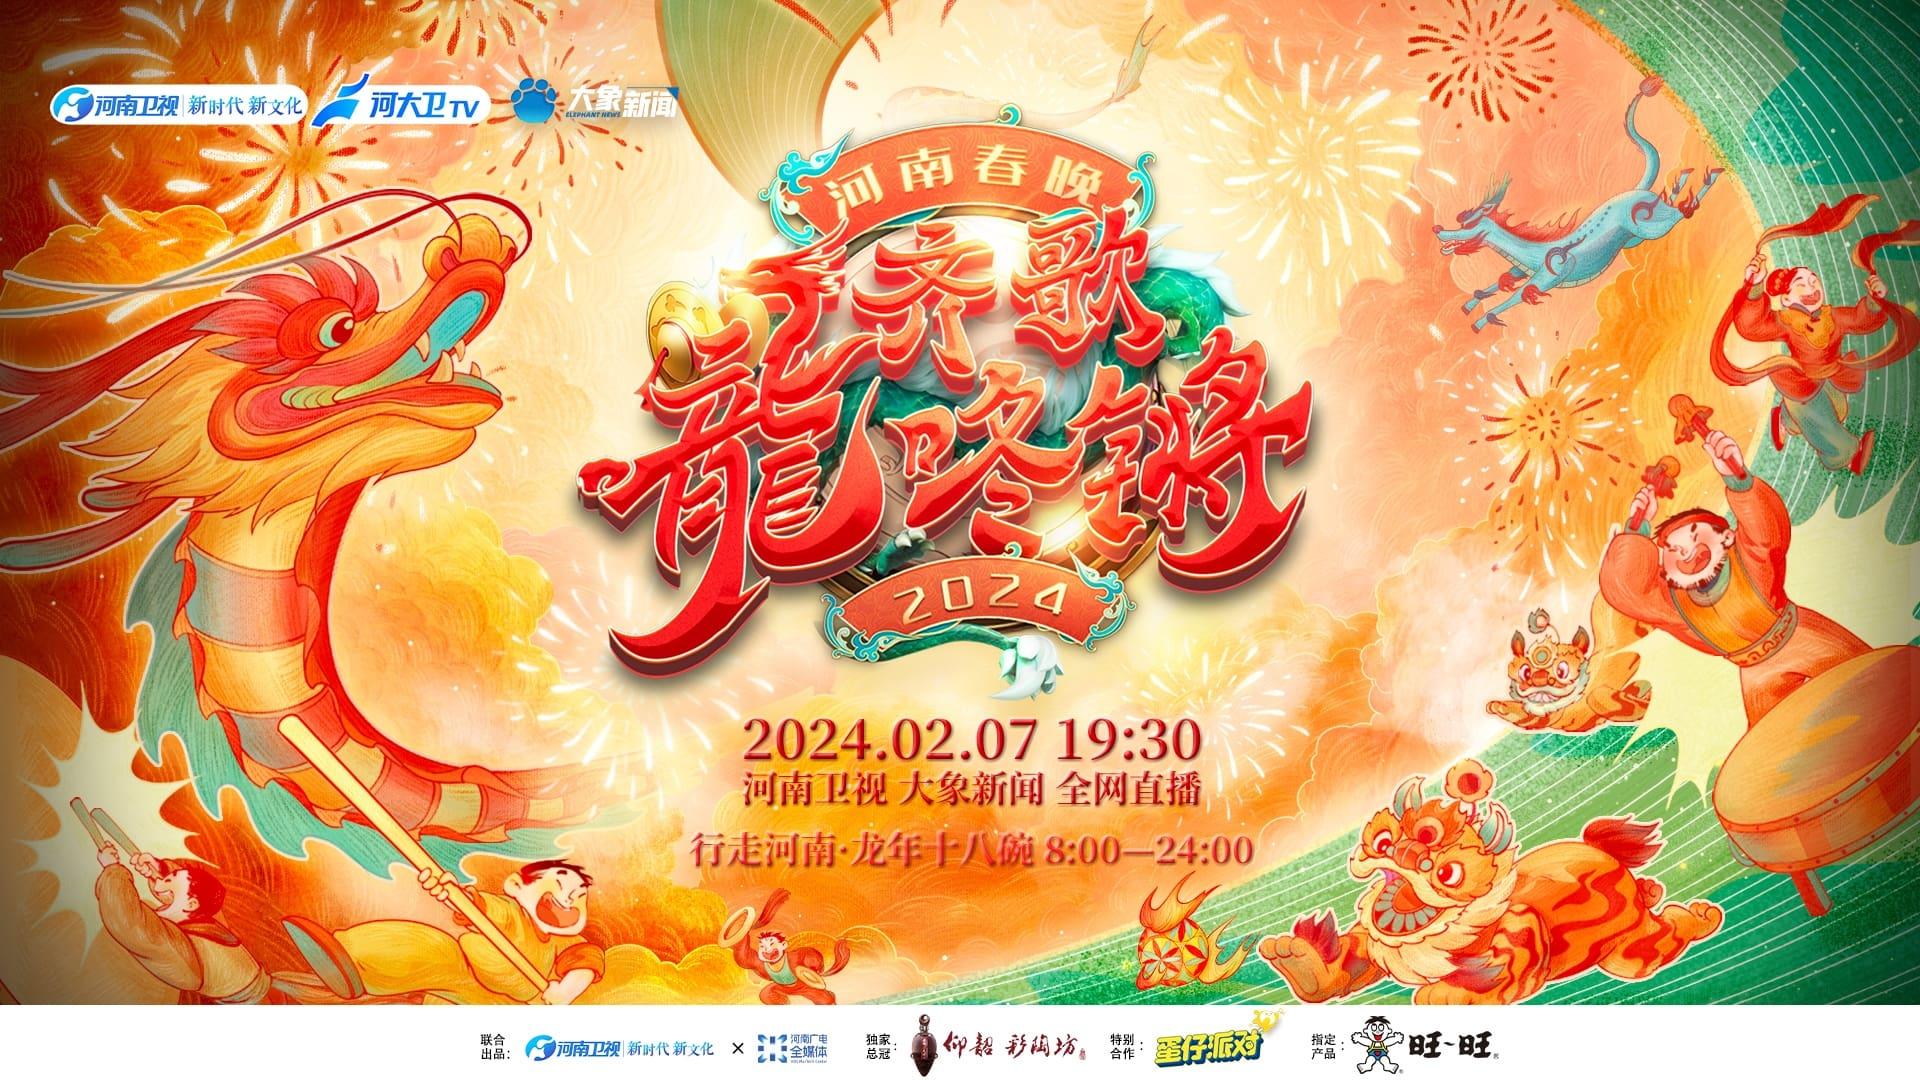 Henan Spring Festival Gala 2024 backdrop